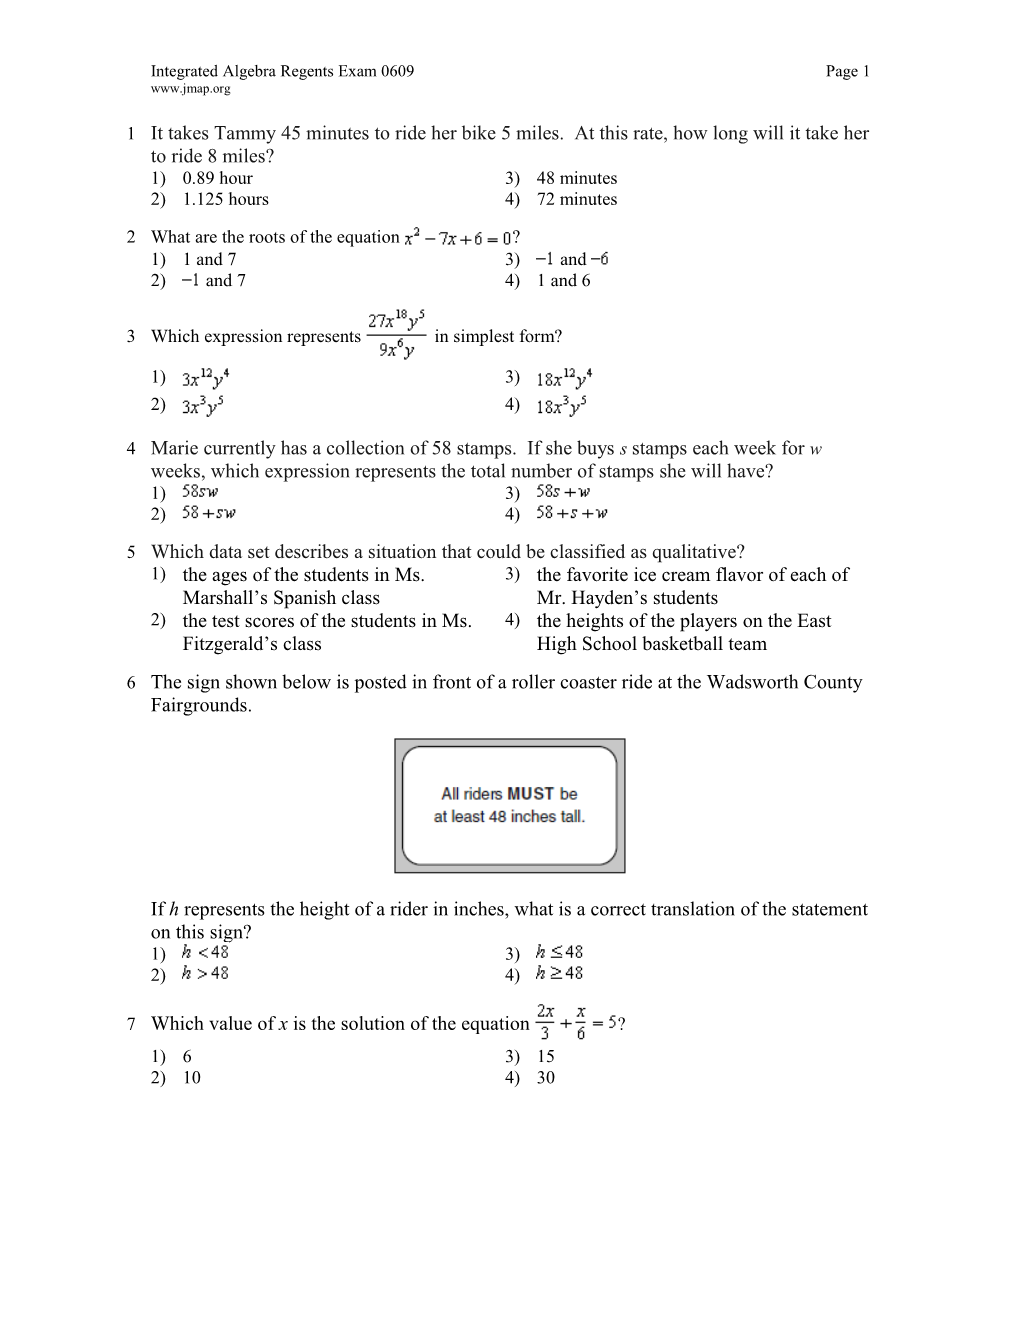 June 2009 Integrated Algebra Regents Exam